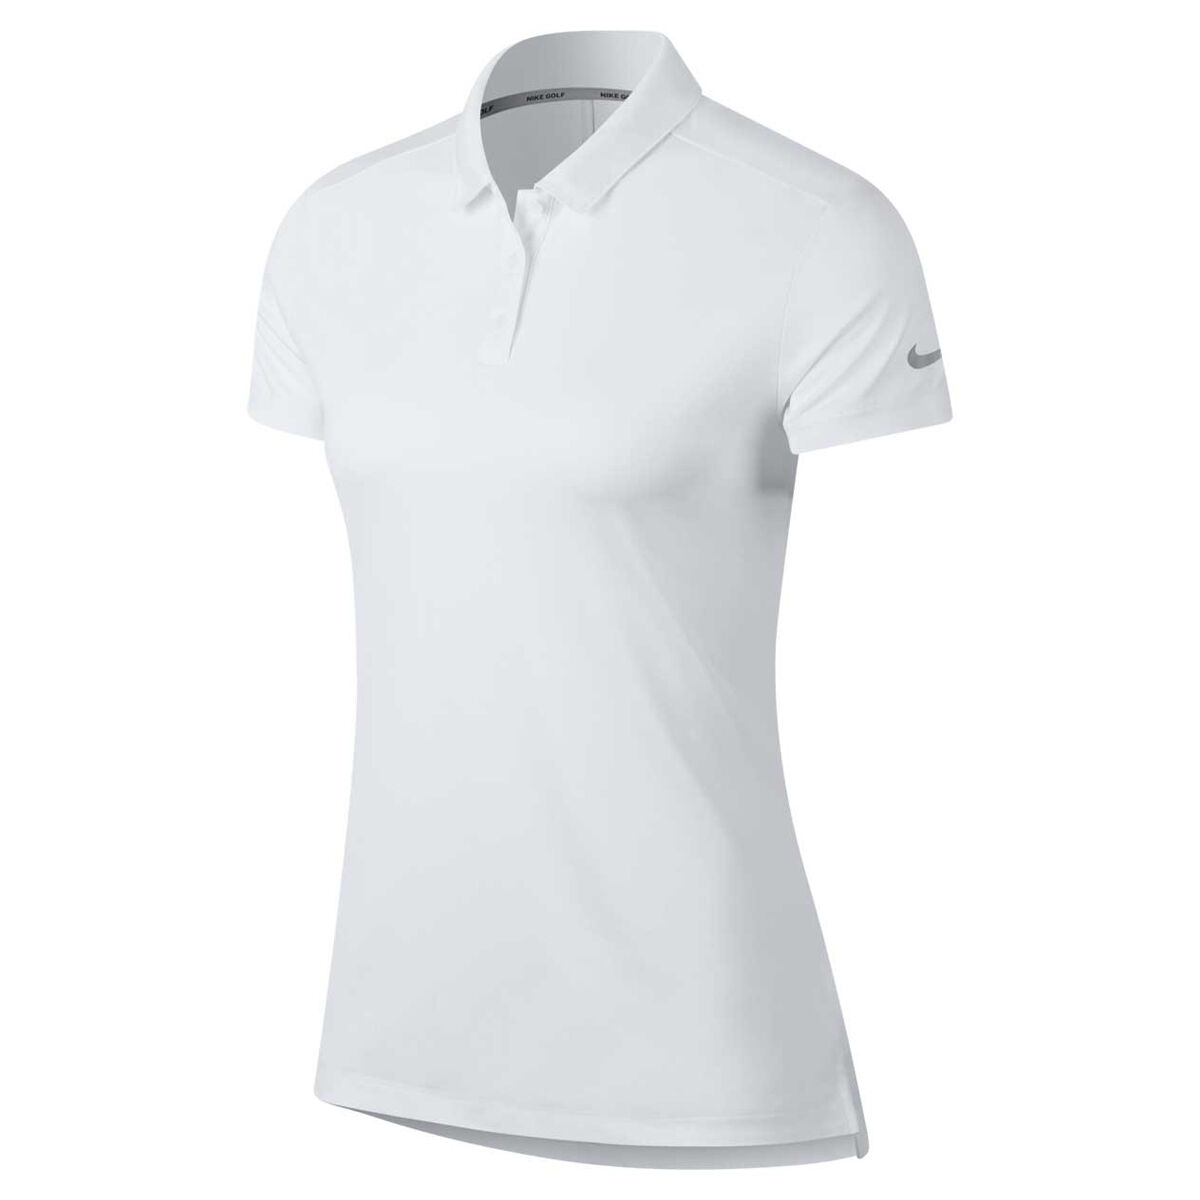 white golf shirt womens